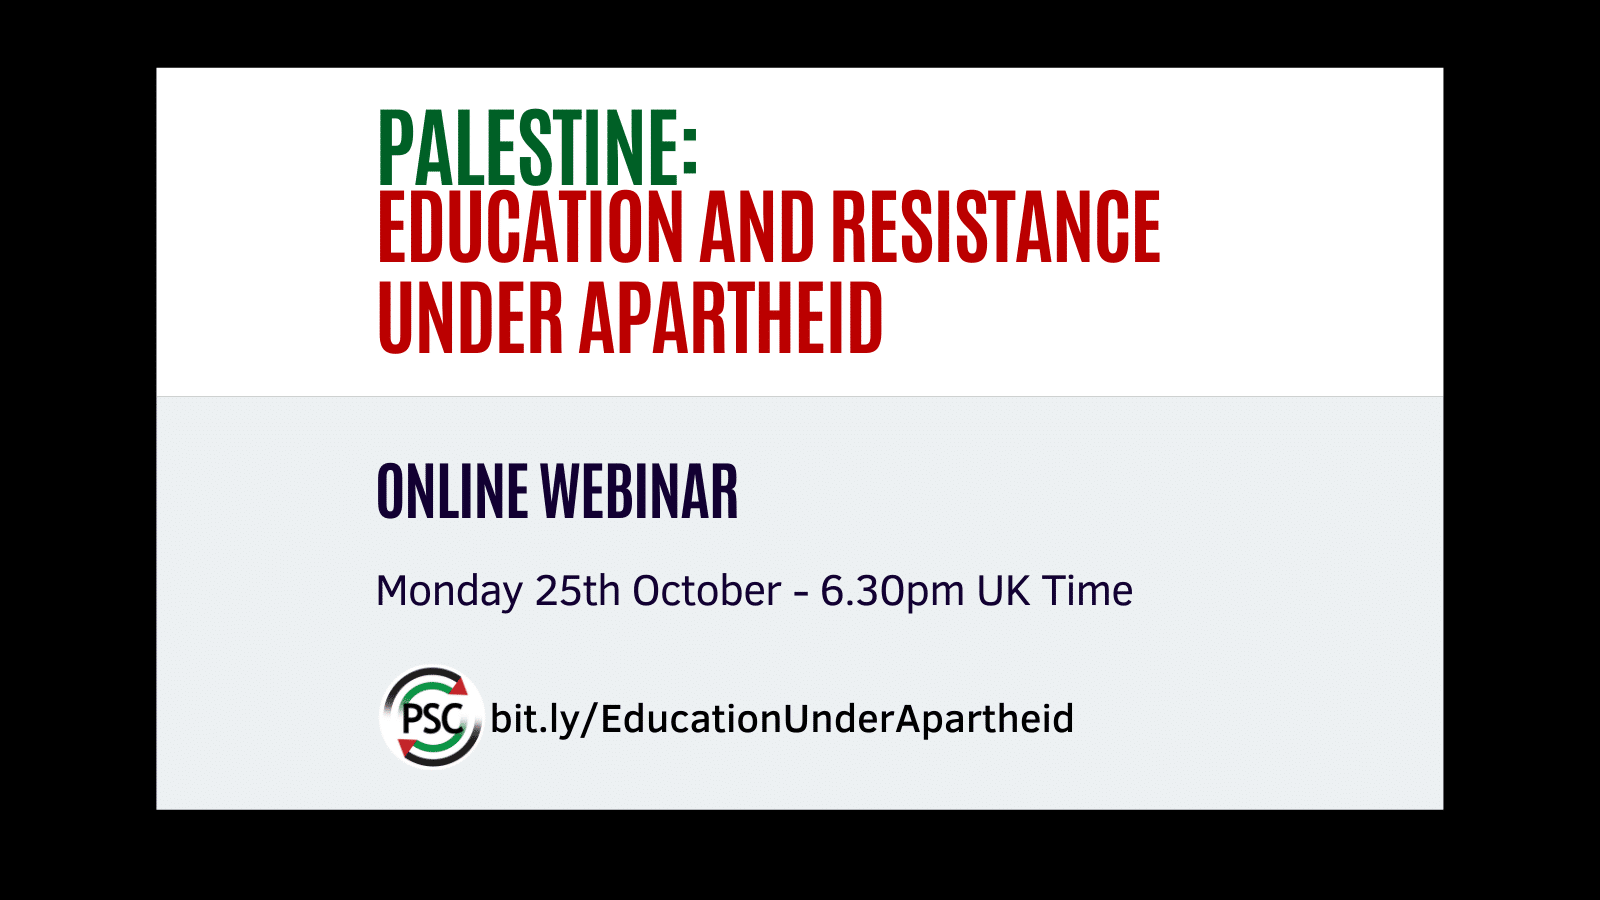 Palestine: Education and Resistance Under Apartheid